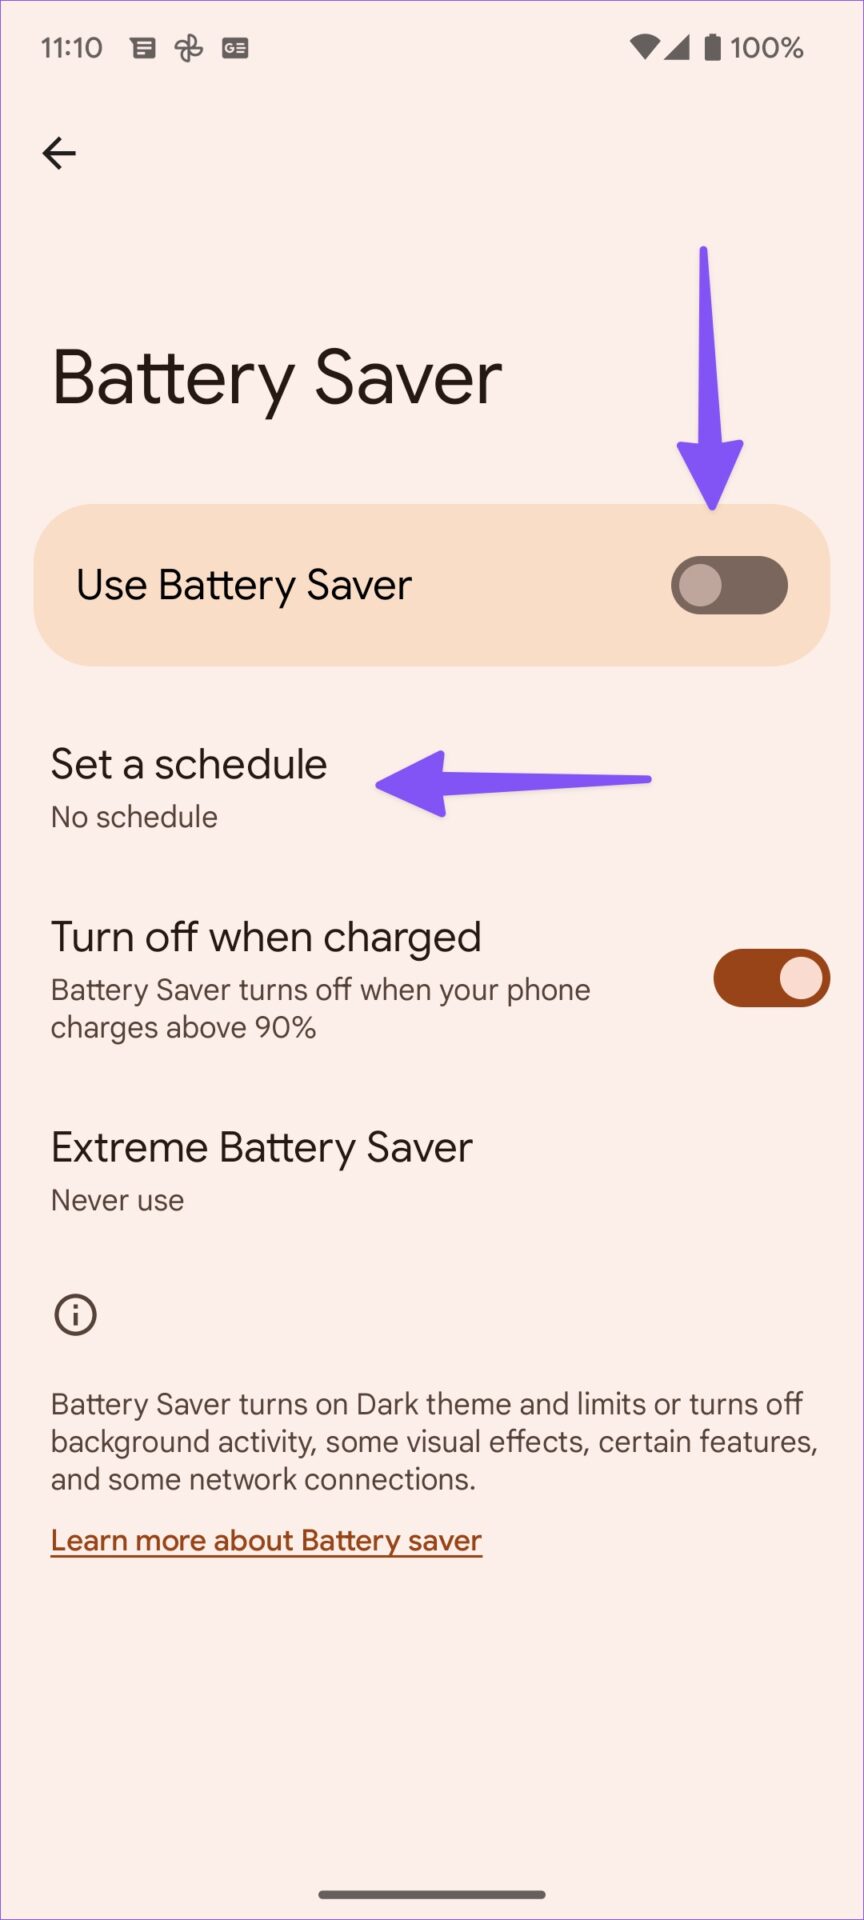 Chọn Use Battery Saver